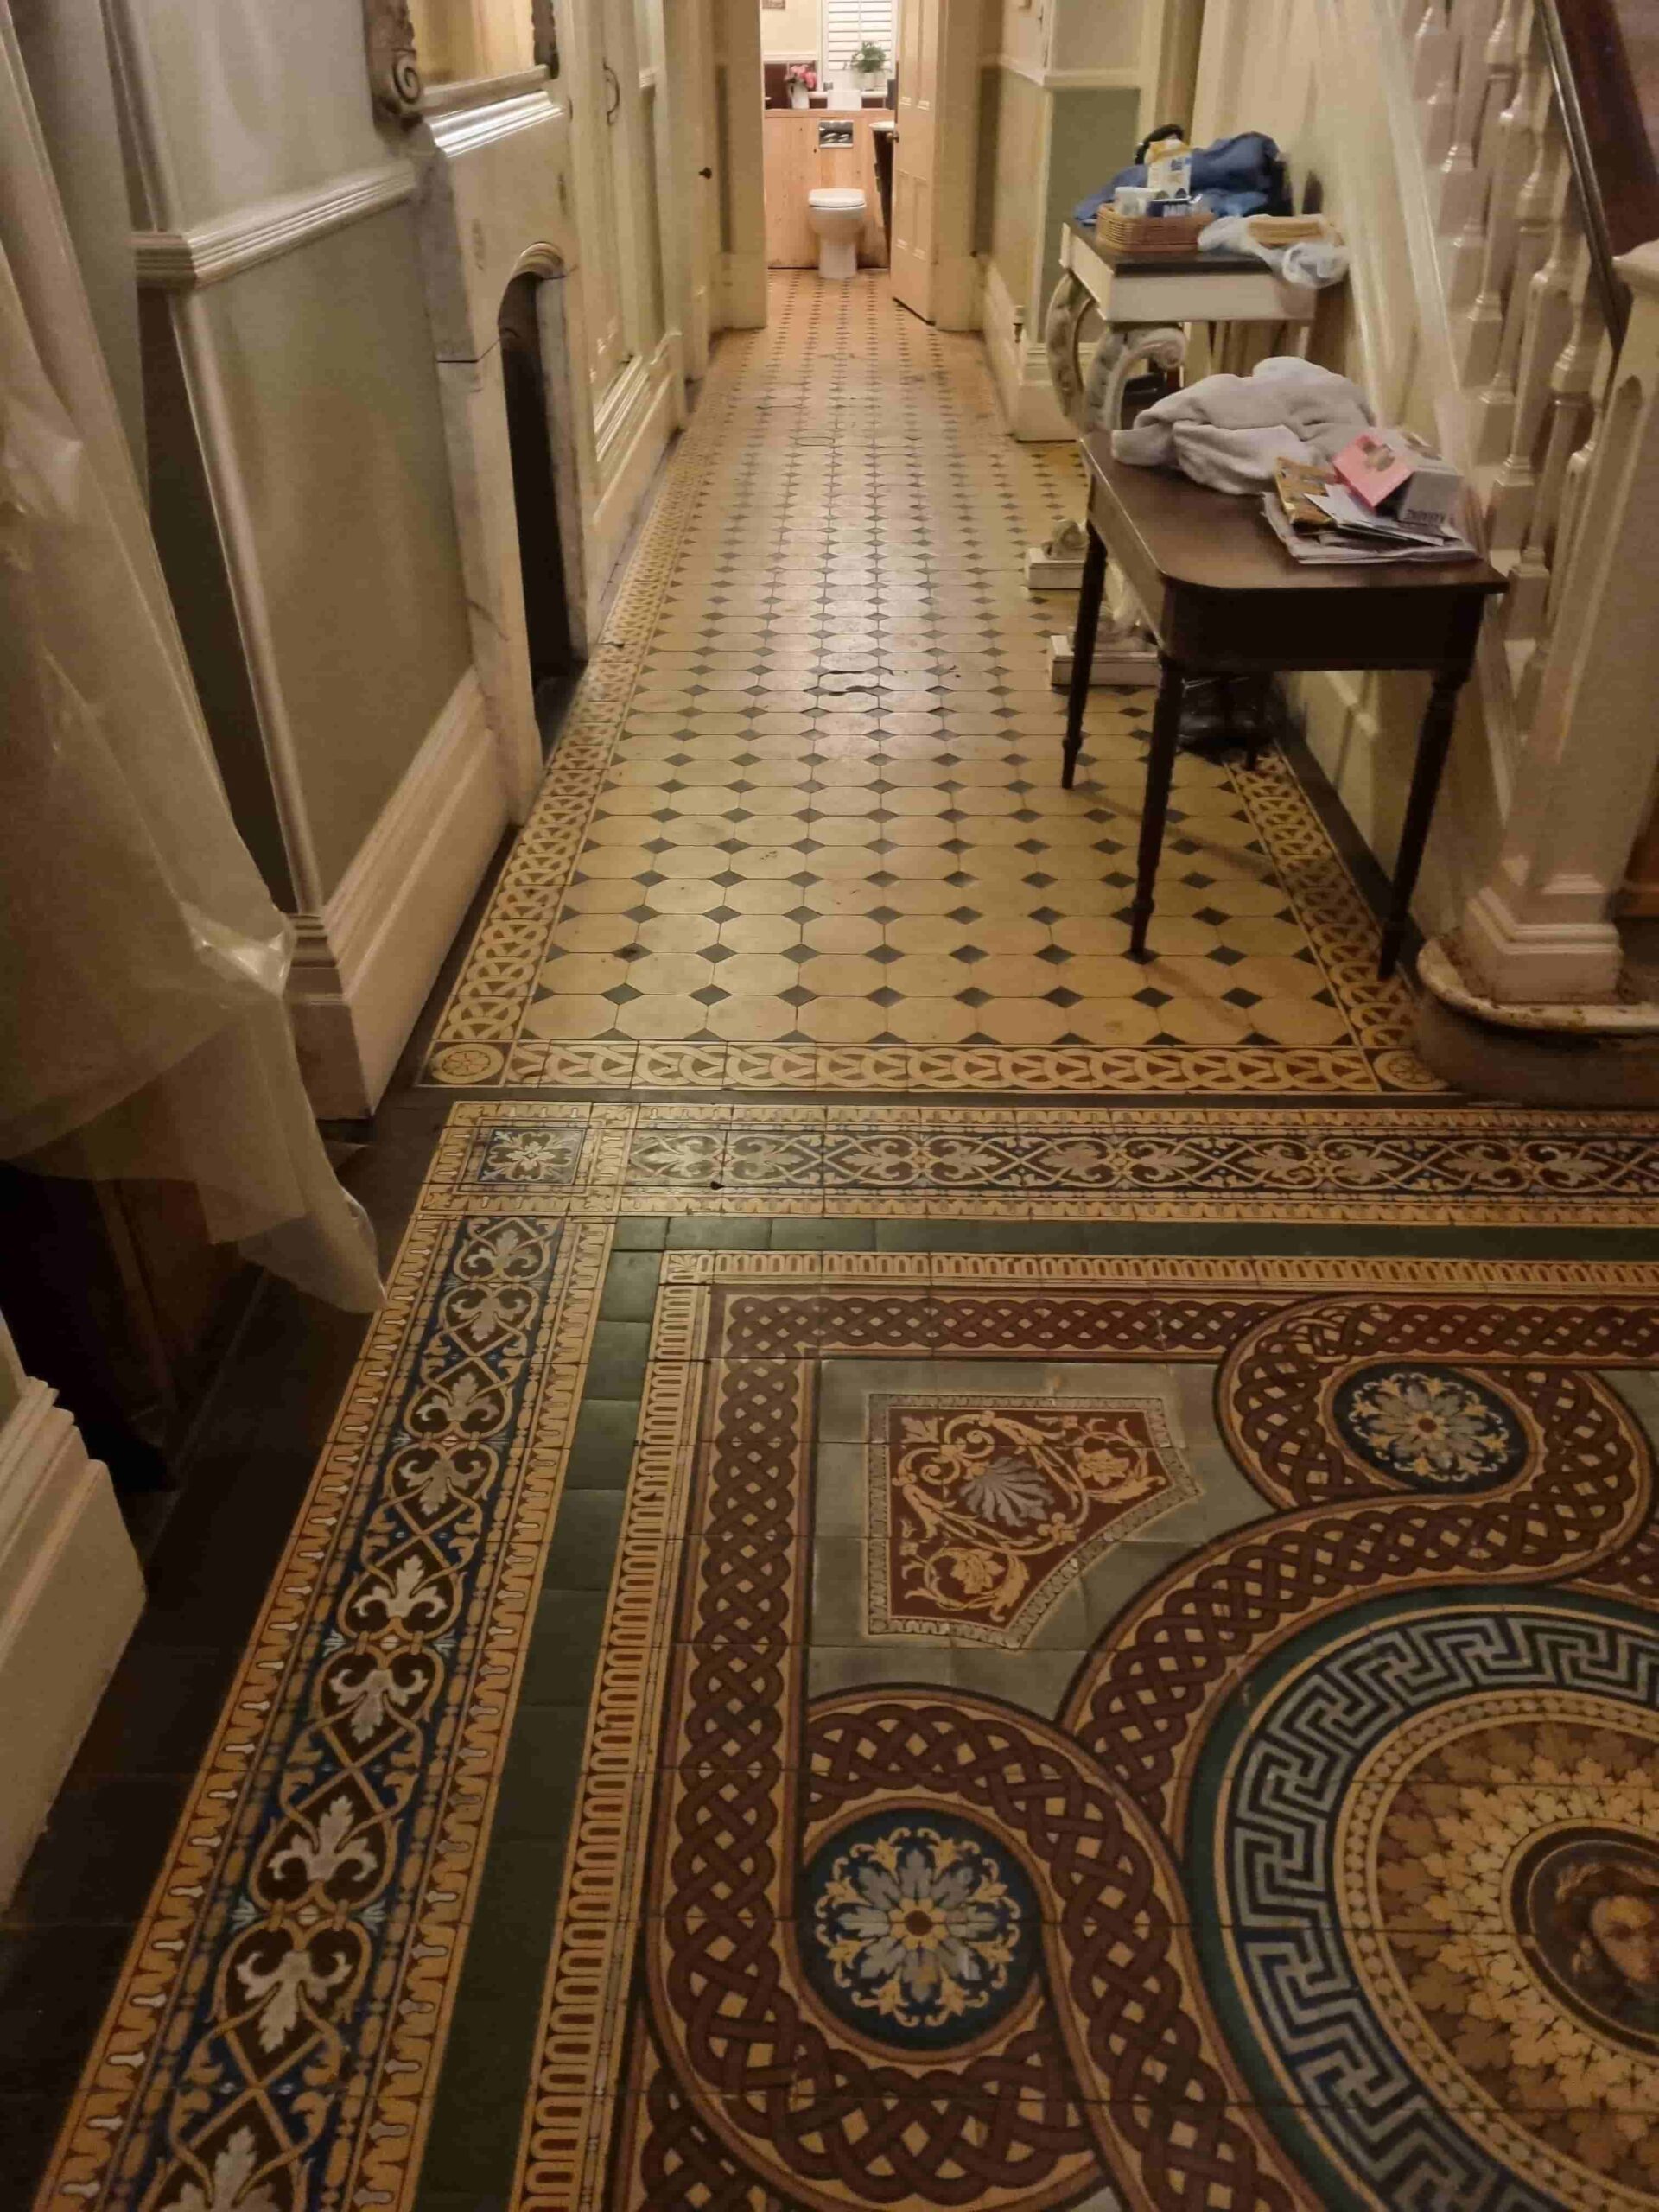 Victorian Tiled Floor Before Renovation Handbridge Cheshire